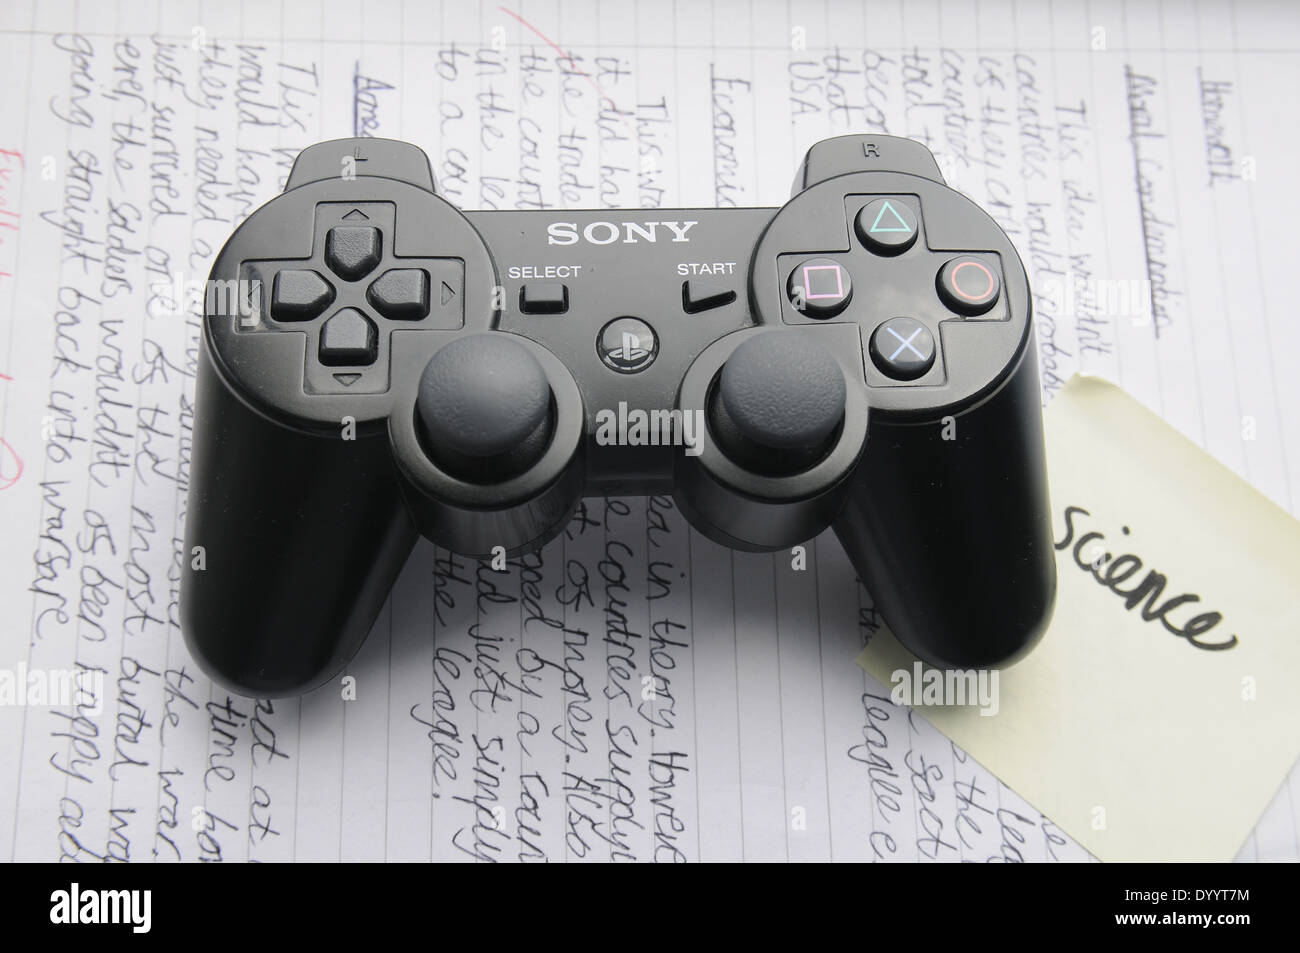 PlayStation Gamer Shares Nostalgic Image Showcasing Classic PS2